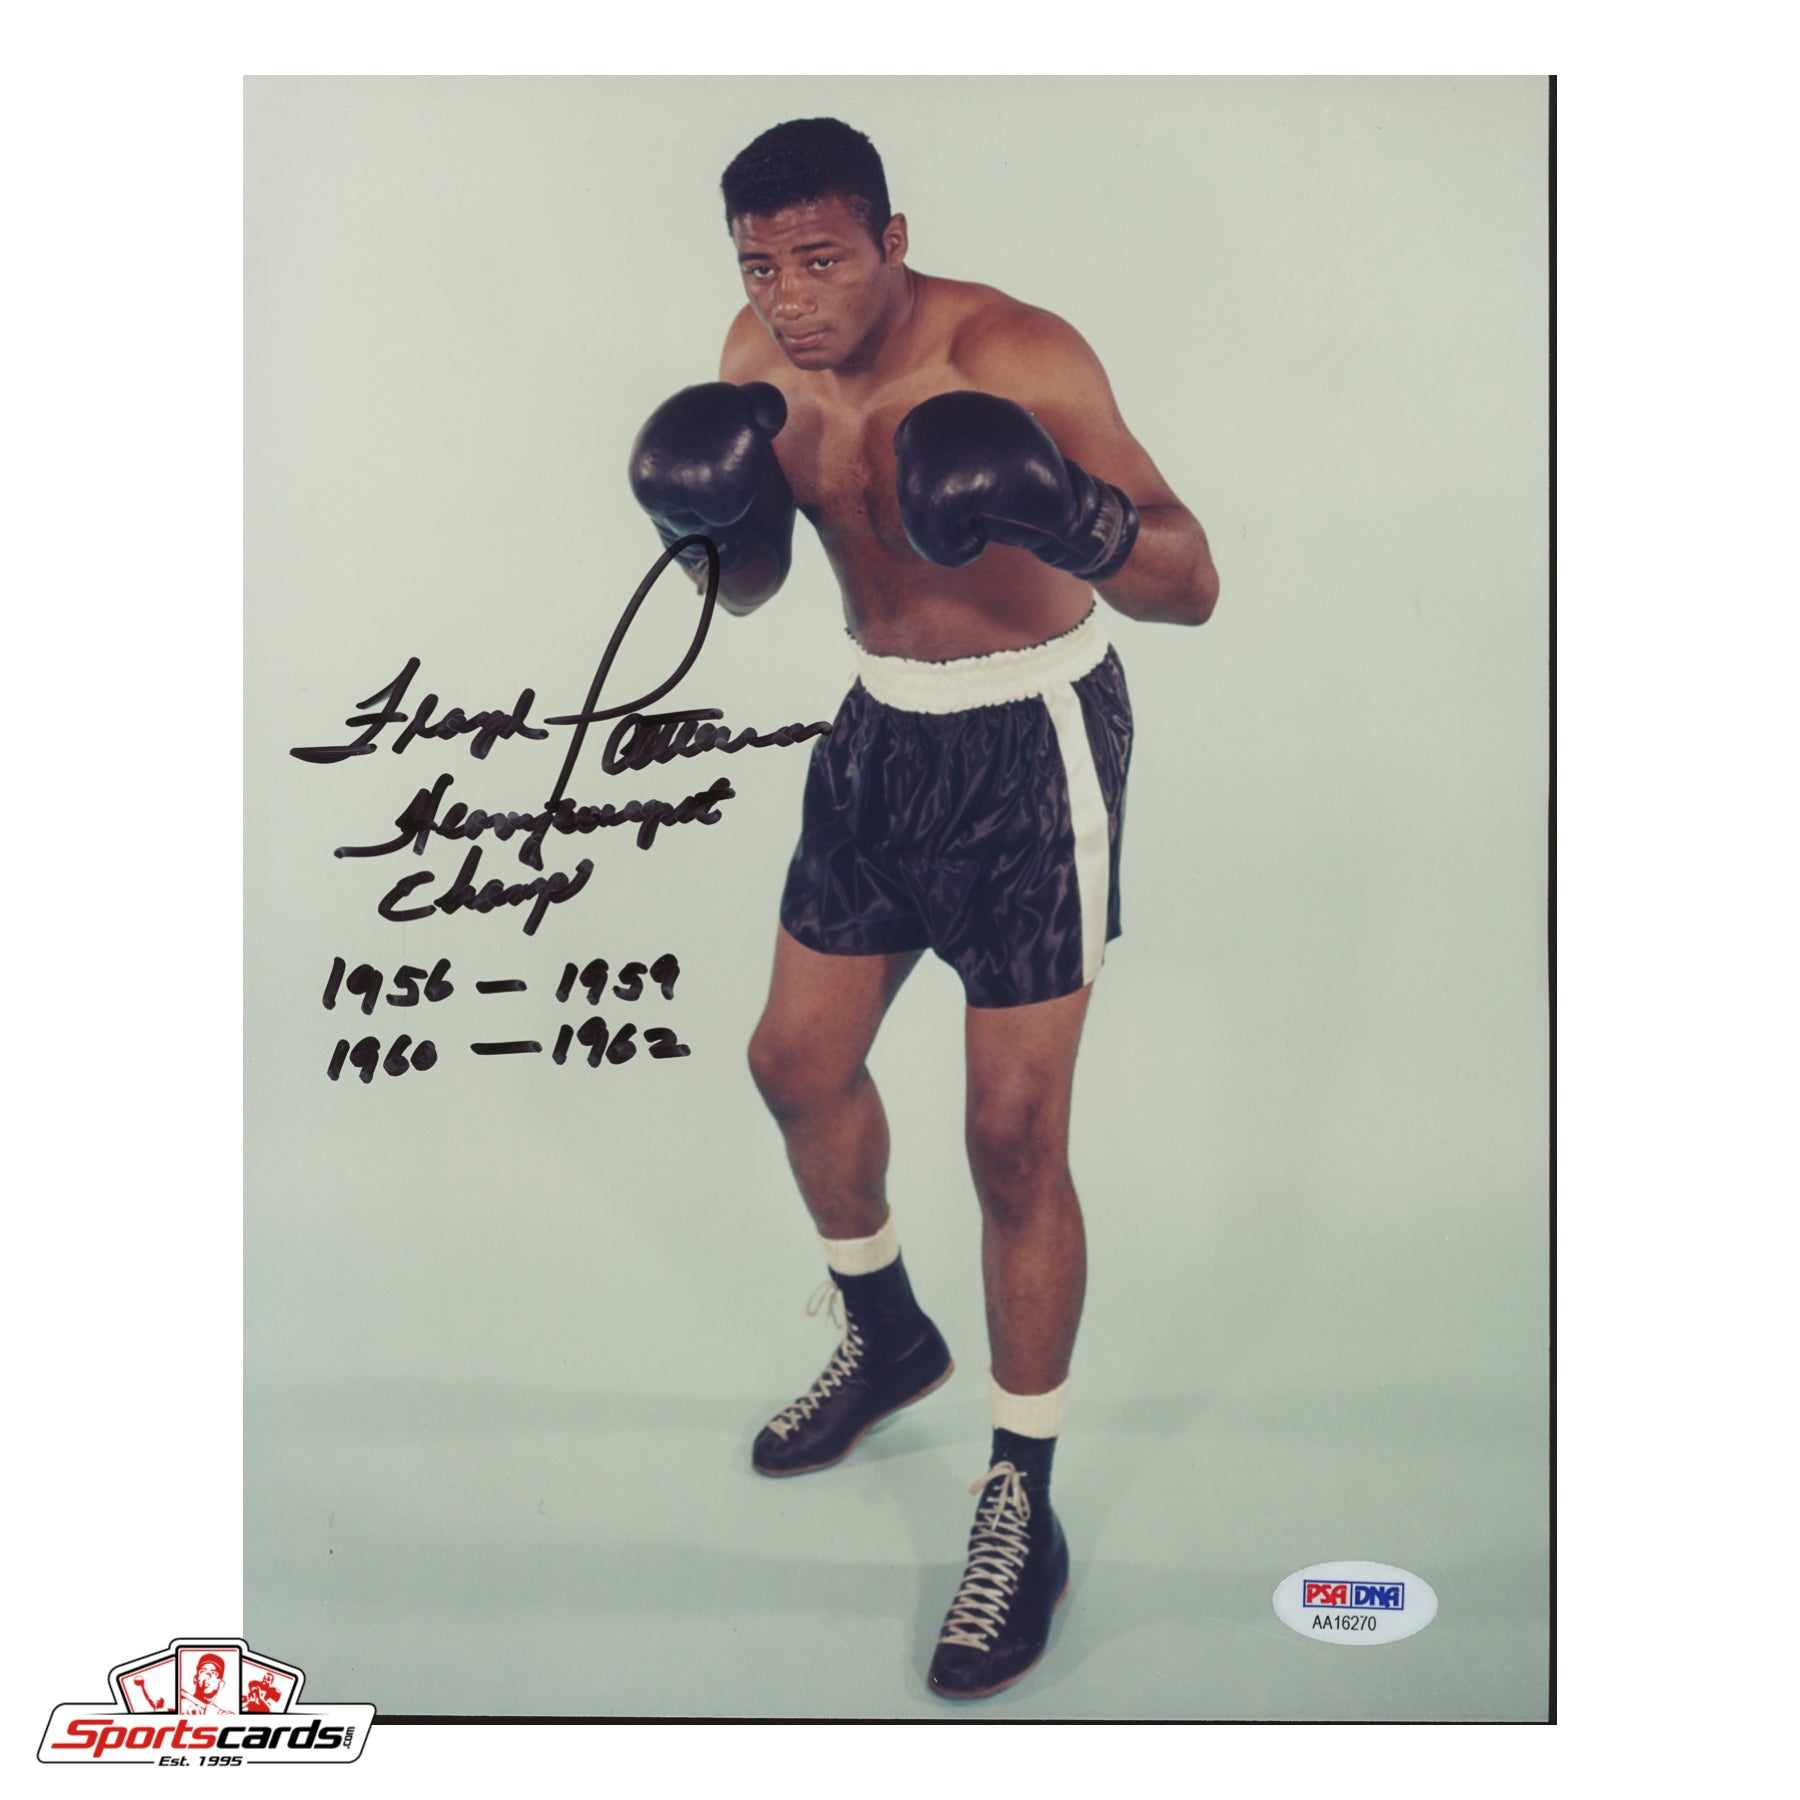 Floyd Patterson "Heavyweight Champ 1956-1959  1960-1962" Signed 8x10 Photograph - PSA COA